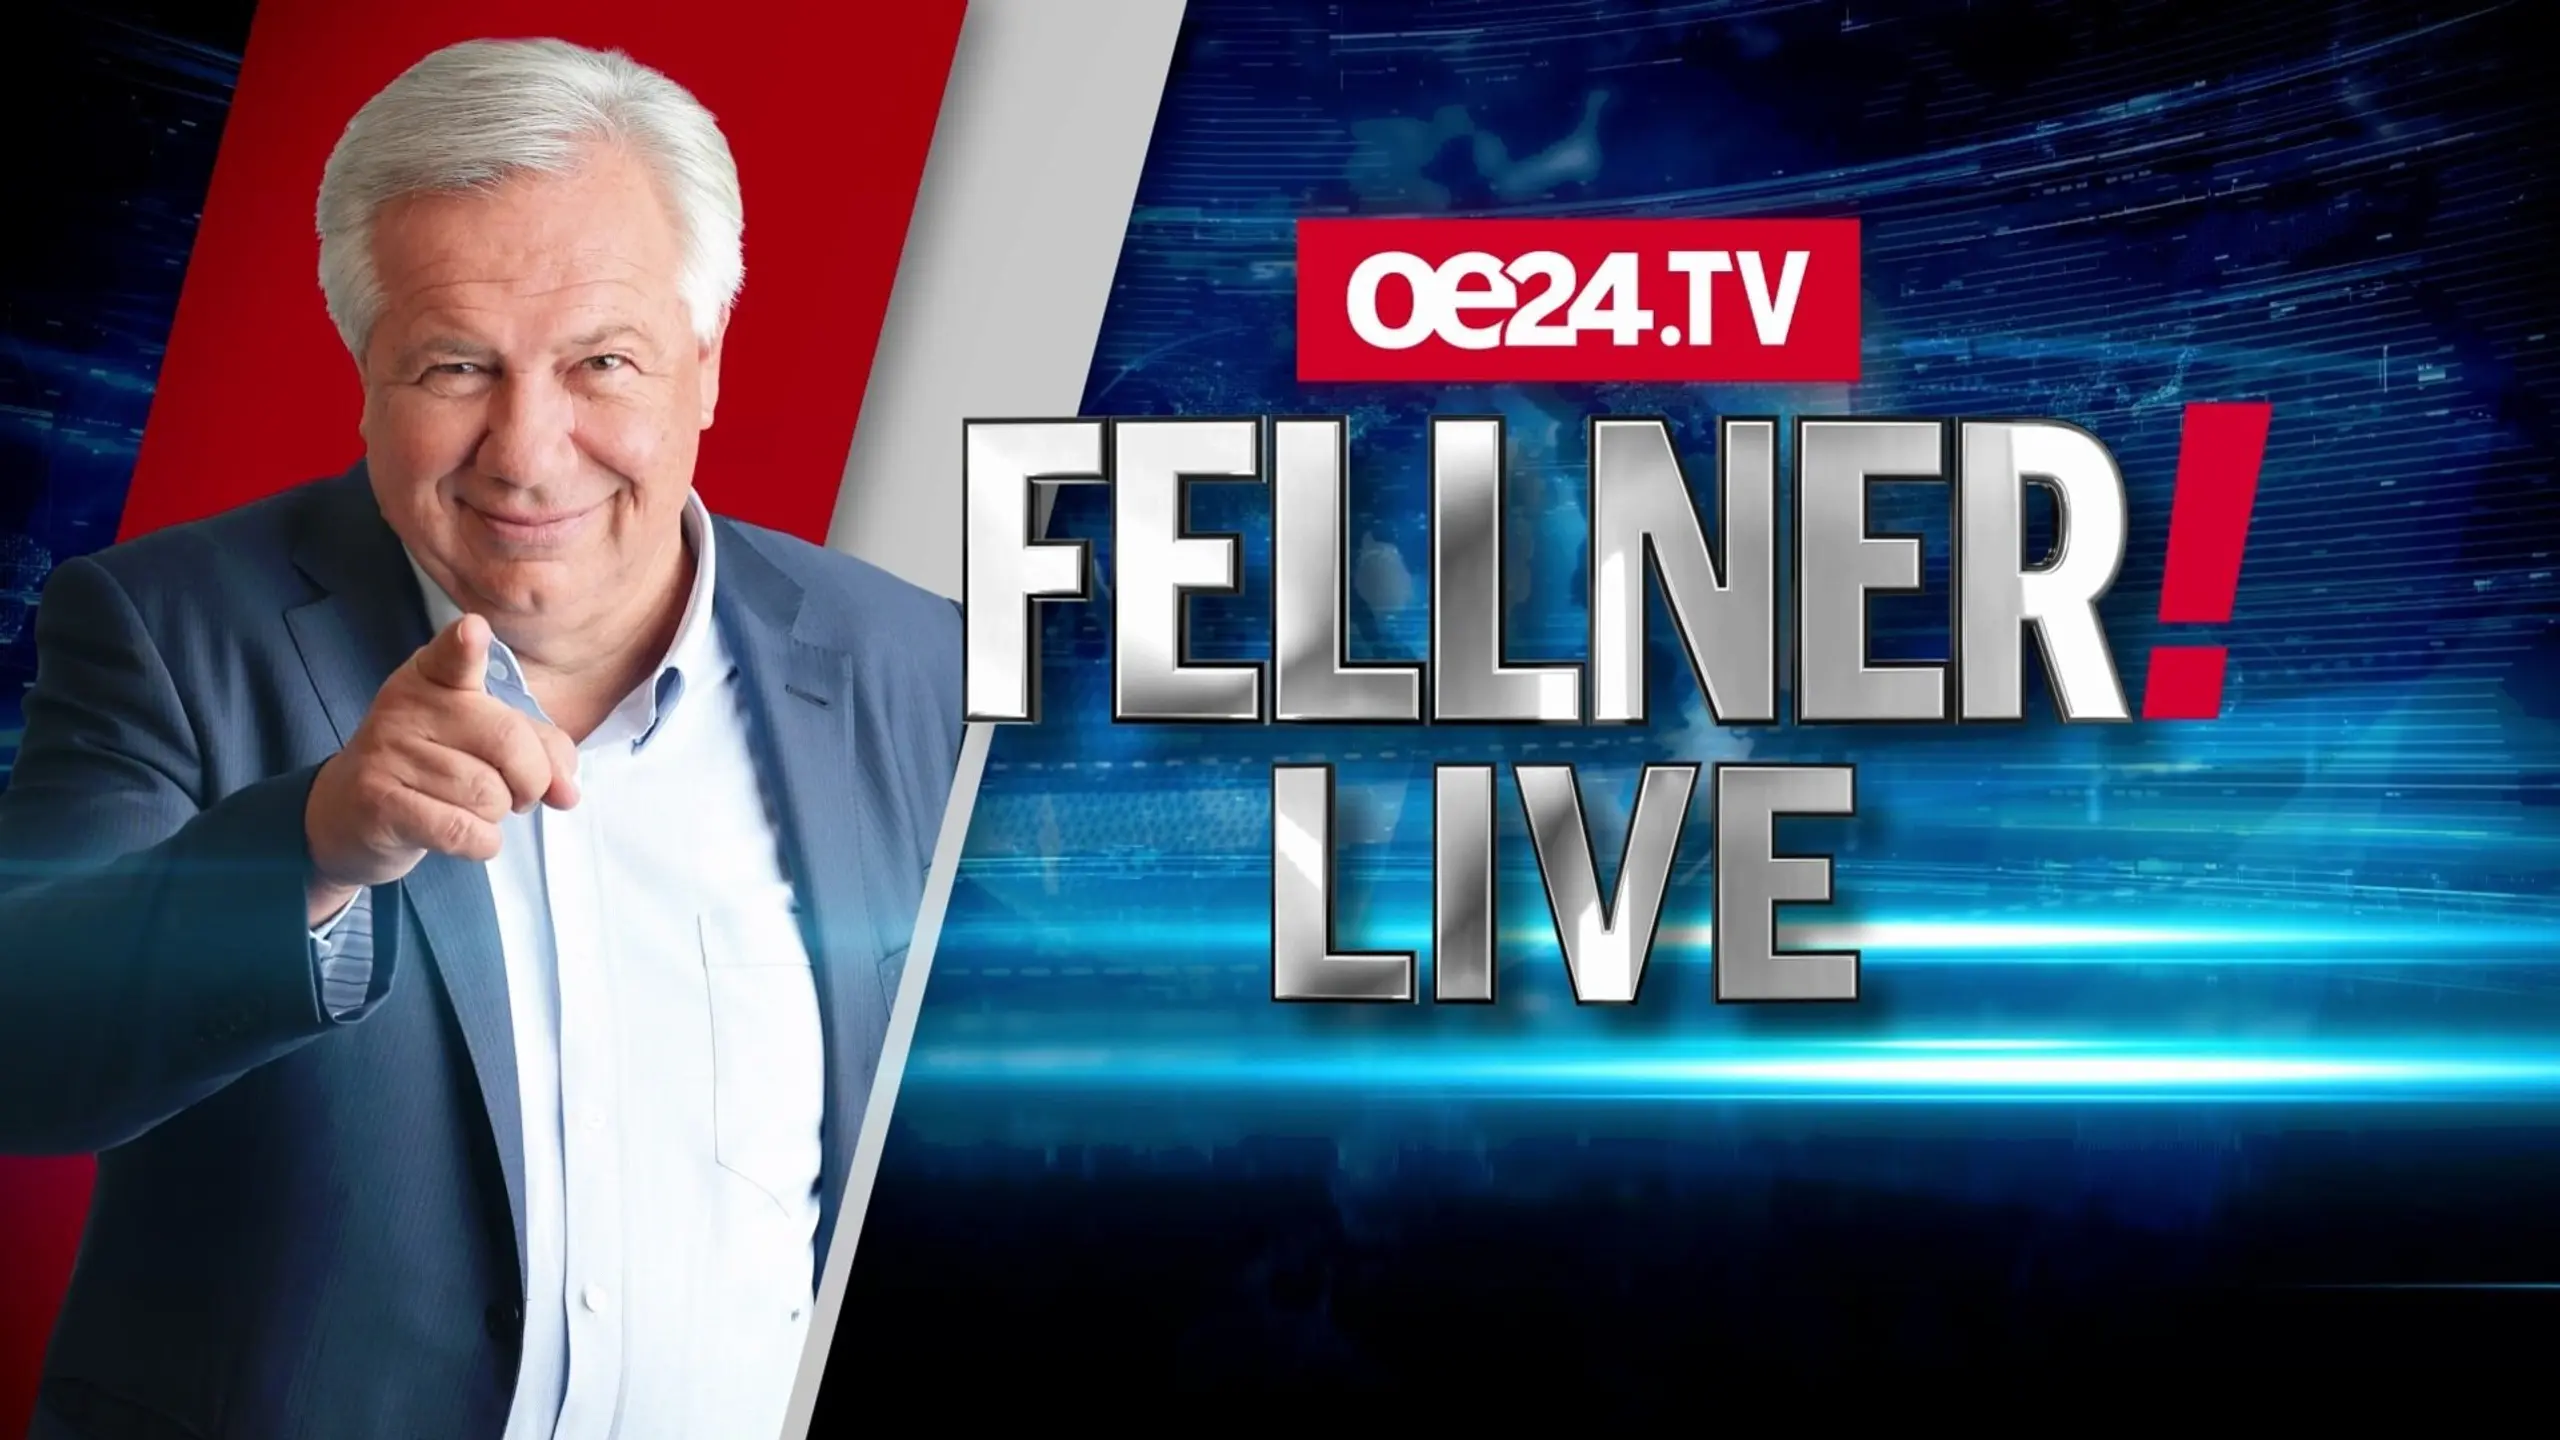 FELLNER! LIVE Die Kult-Talk-Show